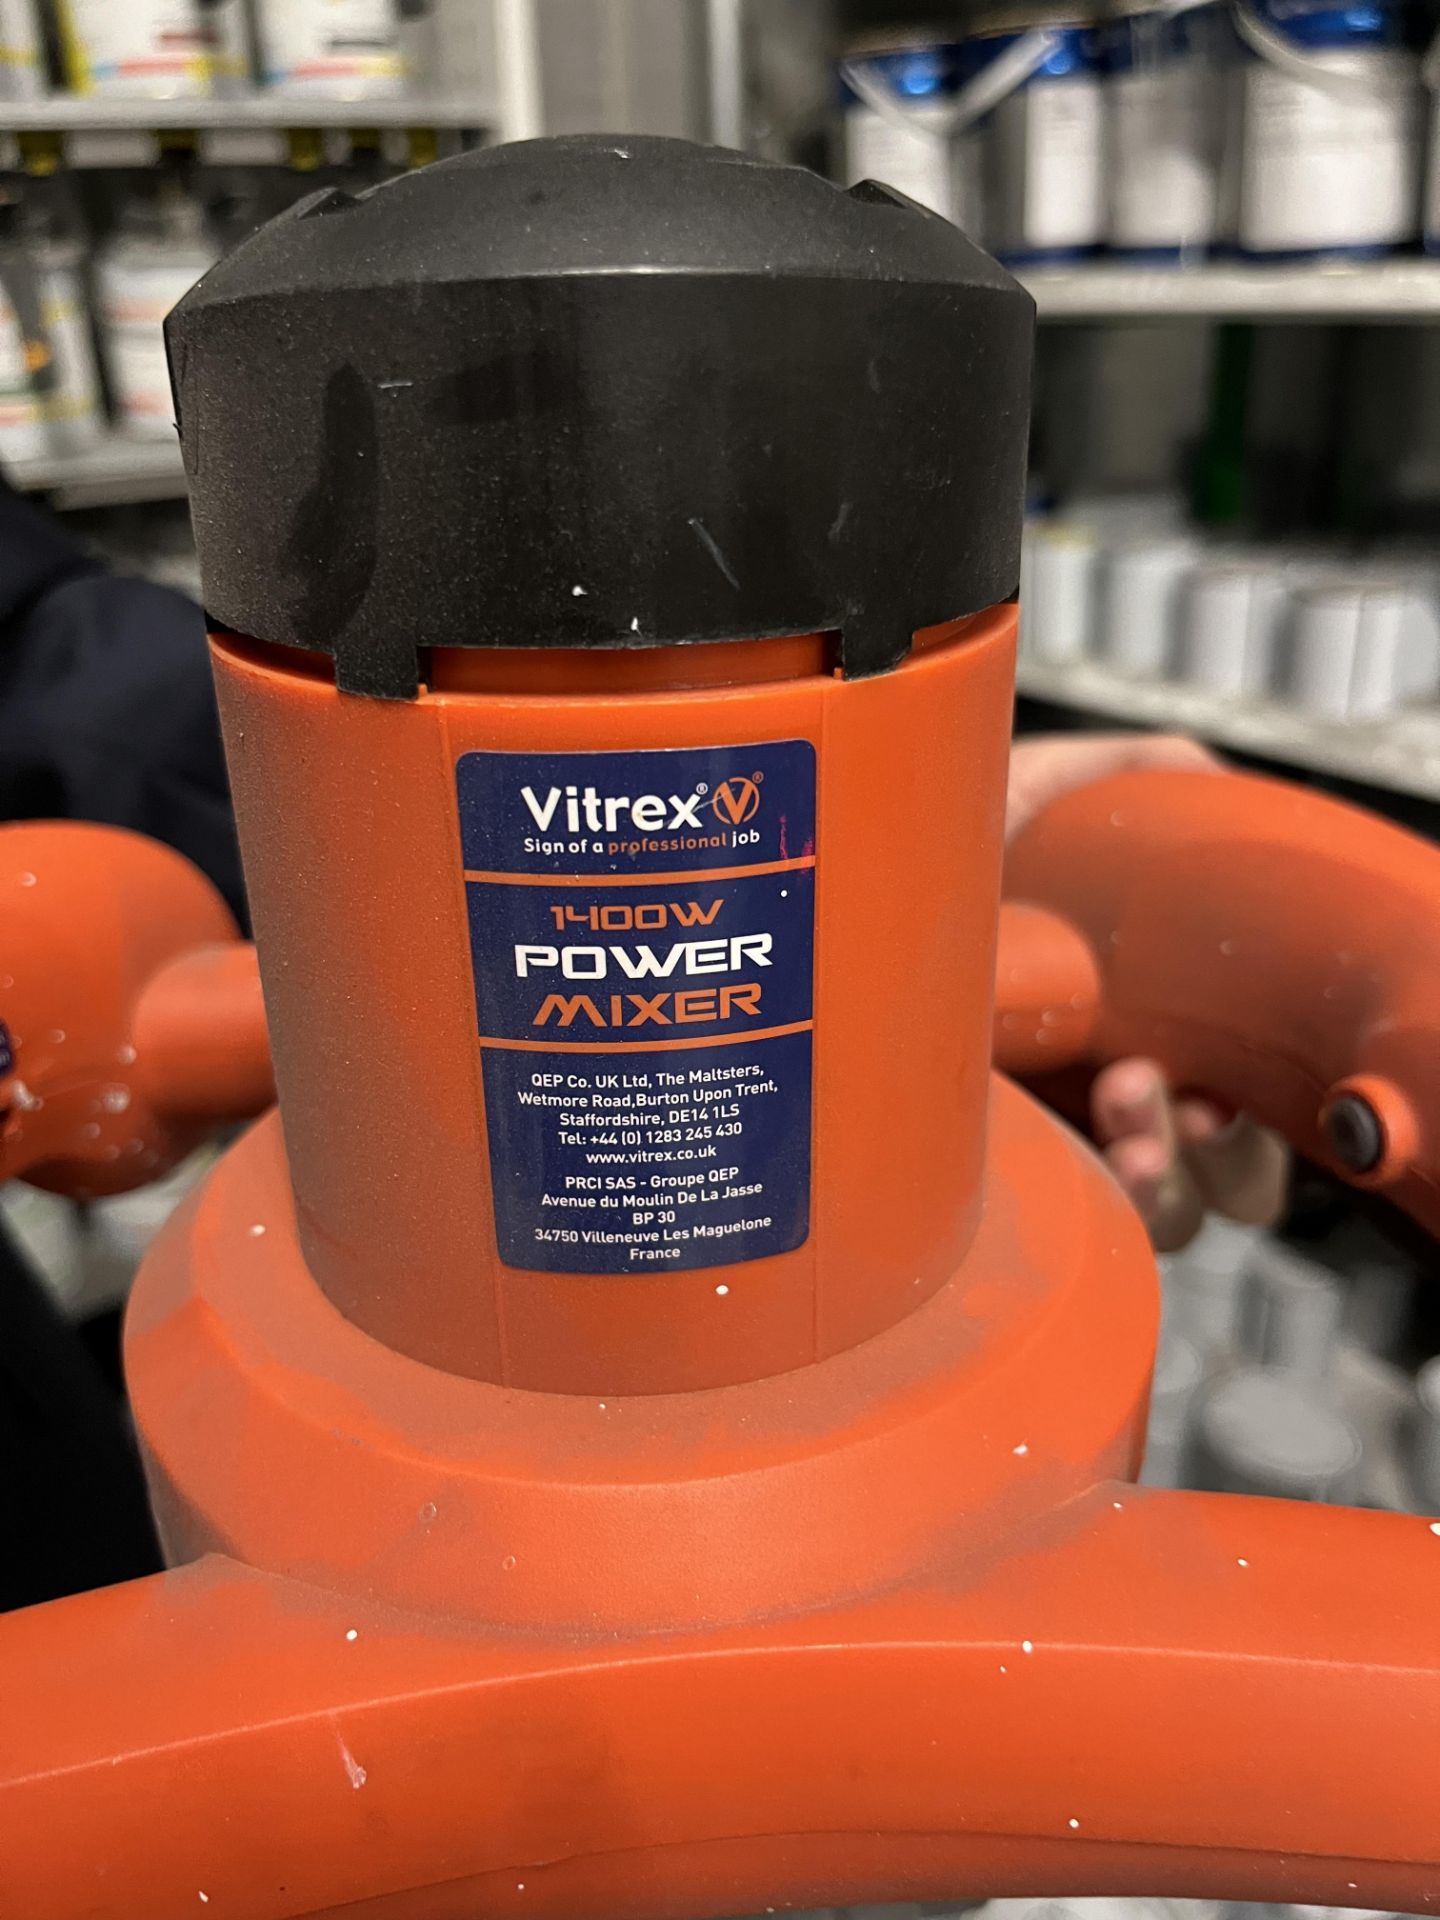 Vitrex 1400W Power Mixer - Image 2 of 2